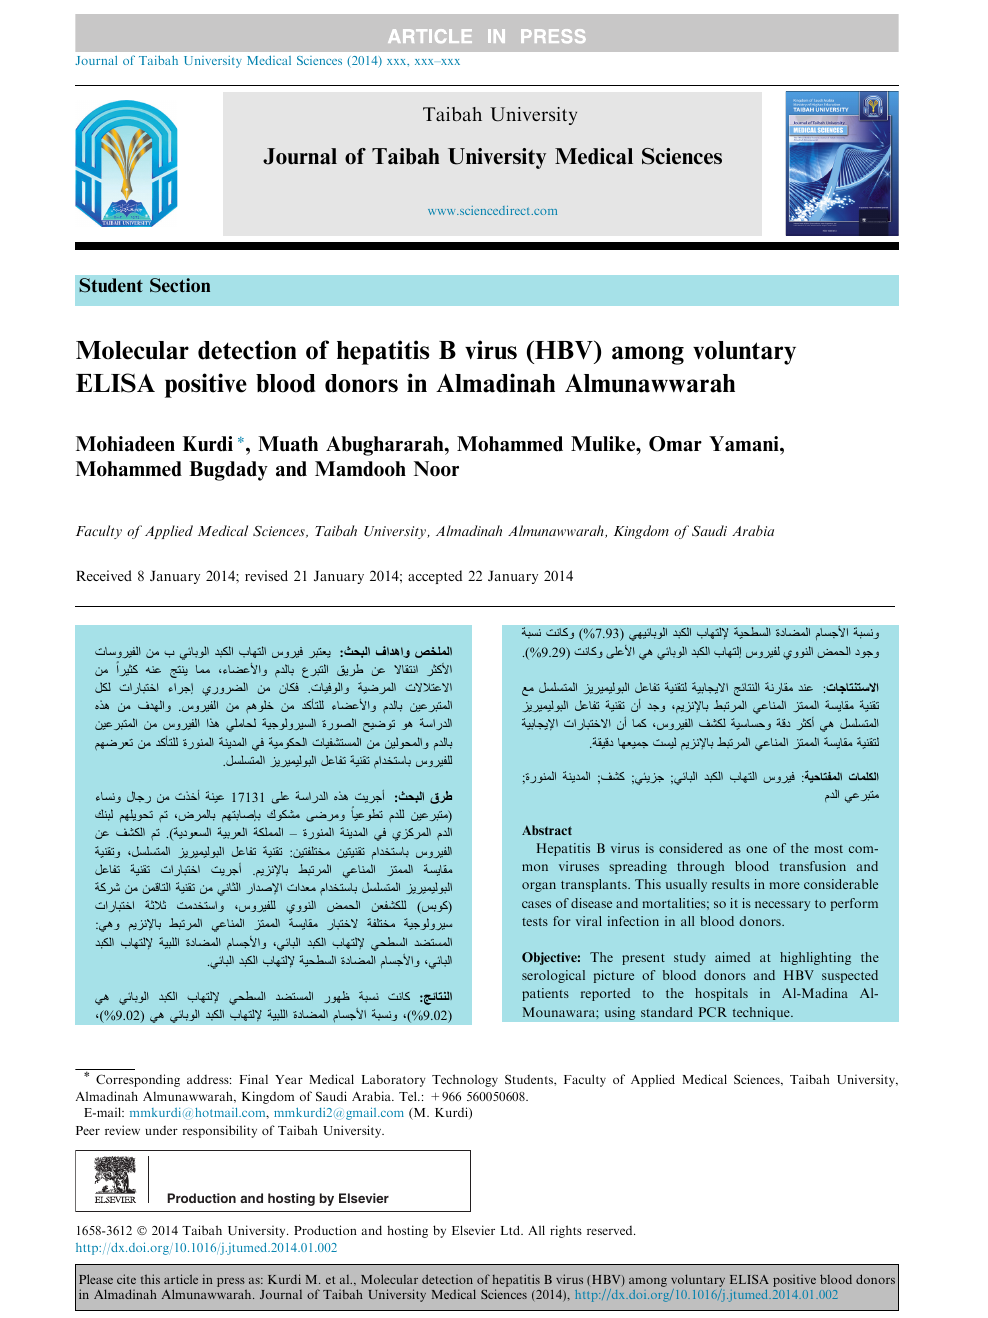 Molecular Detection Of Hepatitis B Virus Hbv Among Voluntary